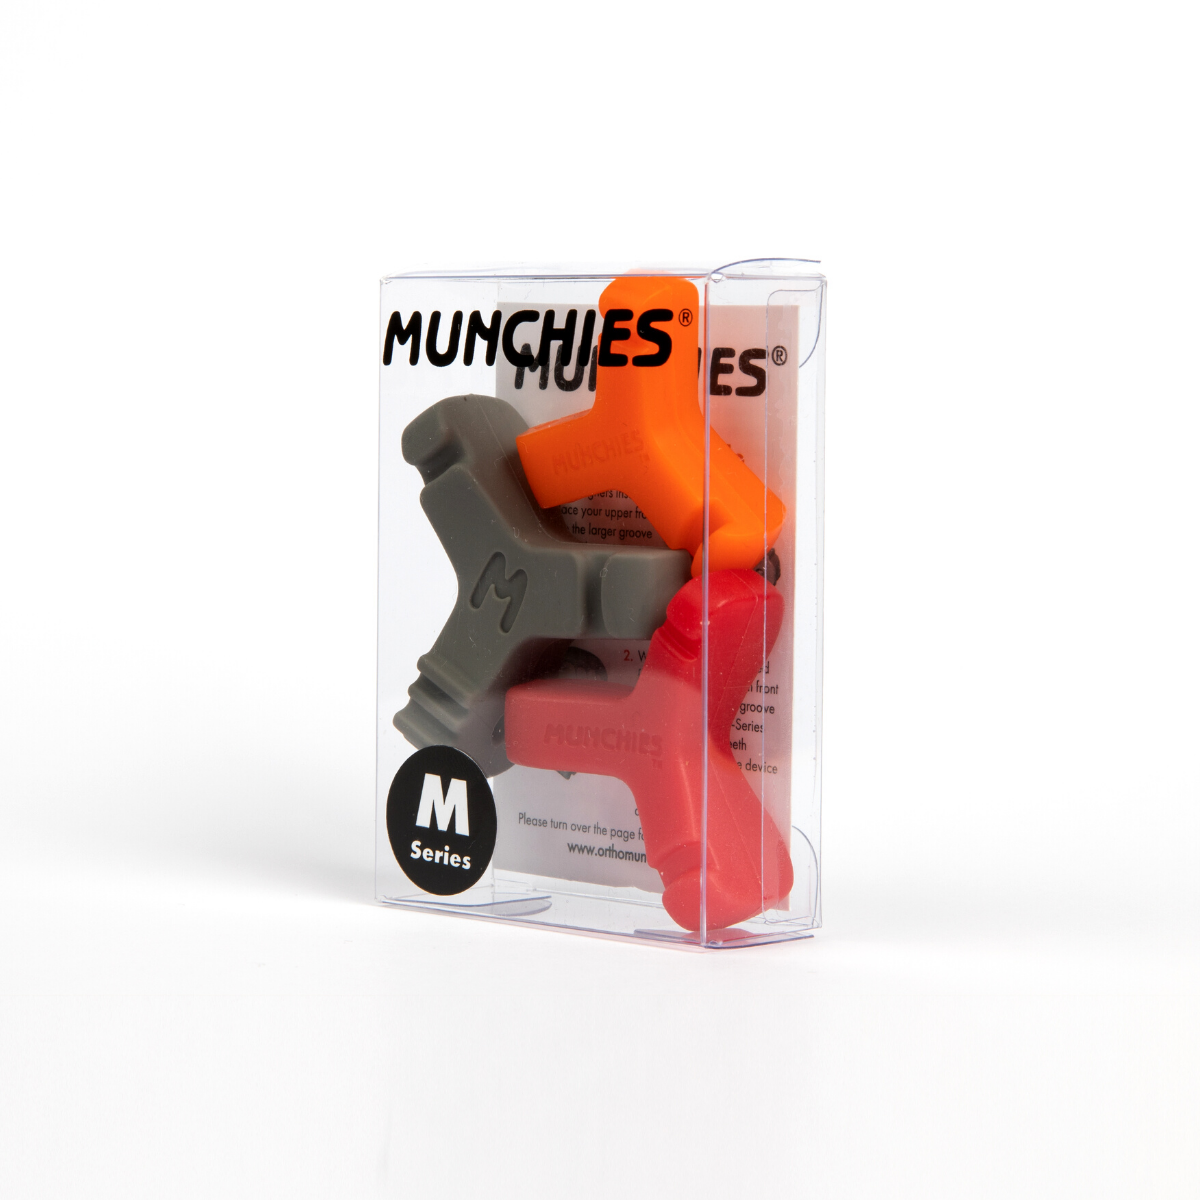 Munchies® M-Series and Original 3 piece pack